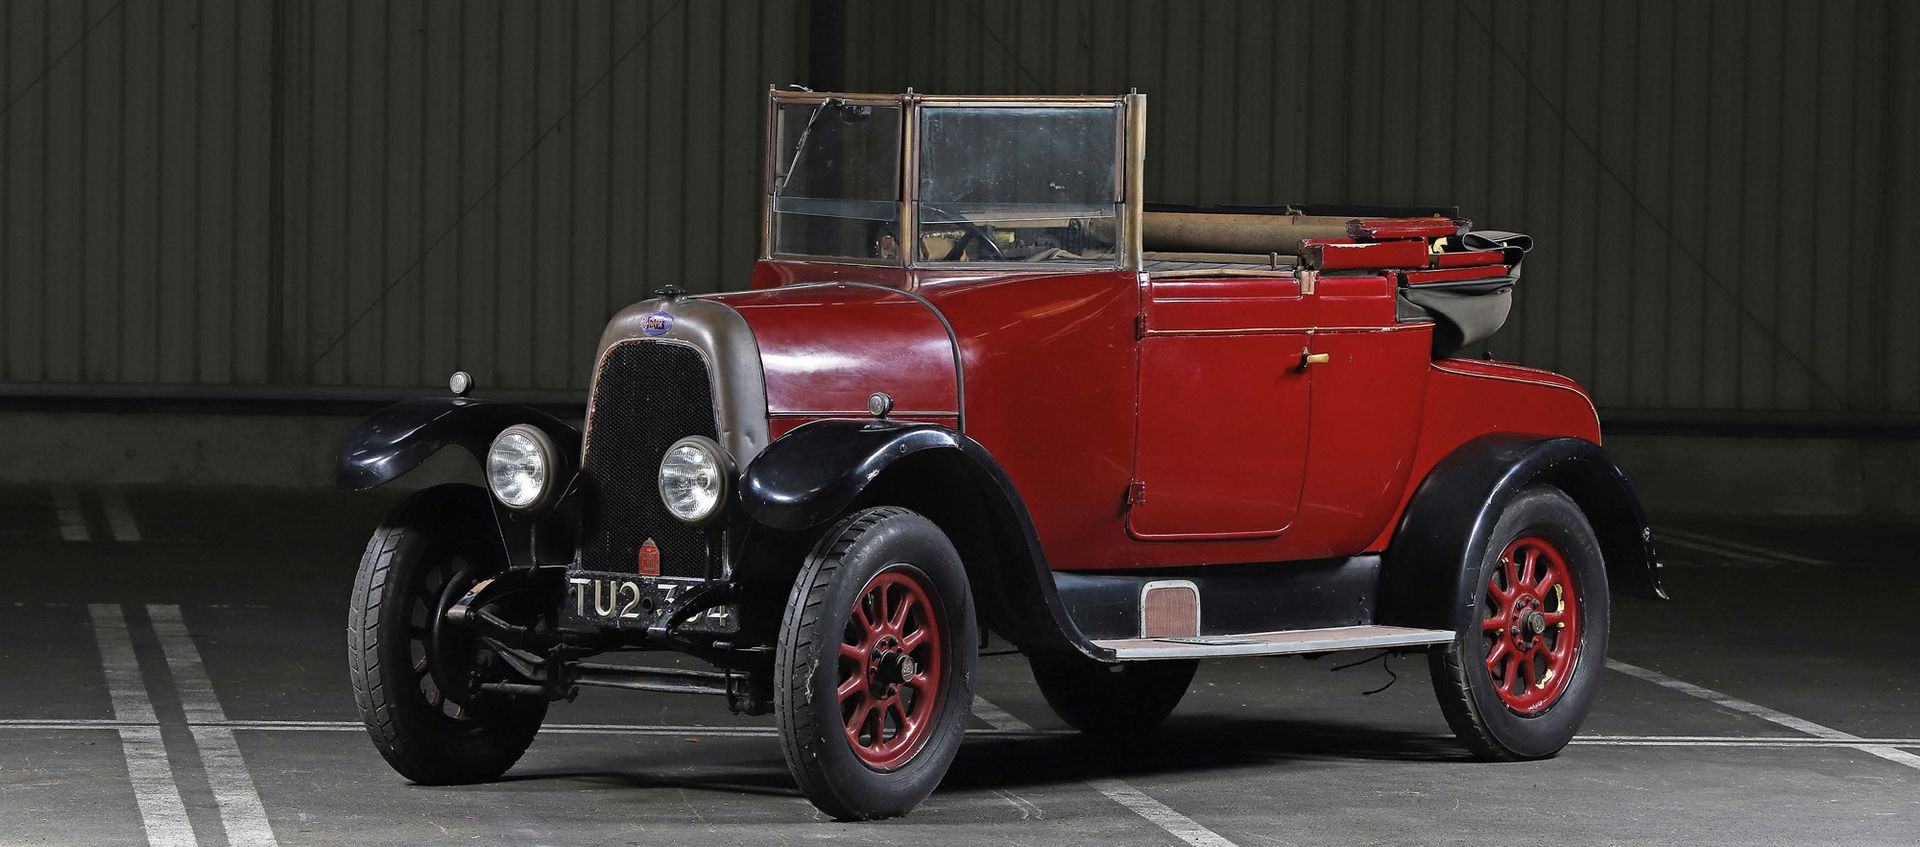 1926 FIAT 501 Coupé Transformable 
毫无保留



欧洲汽车史上的一个重要环节

一战后的第一辆菲亚特

非常有趣的车身设计
&hellip;